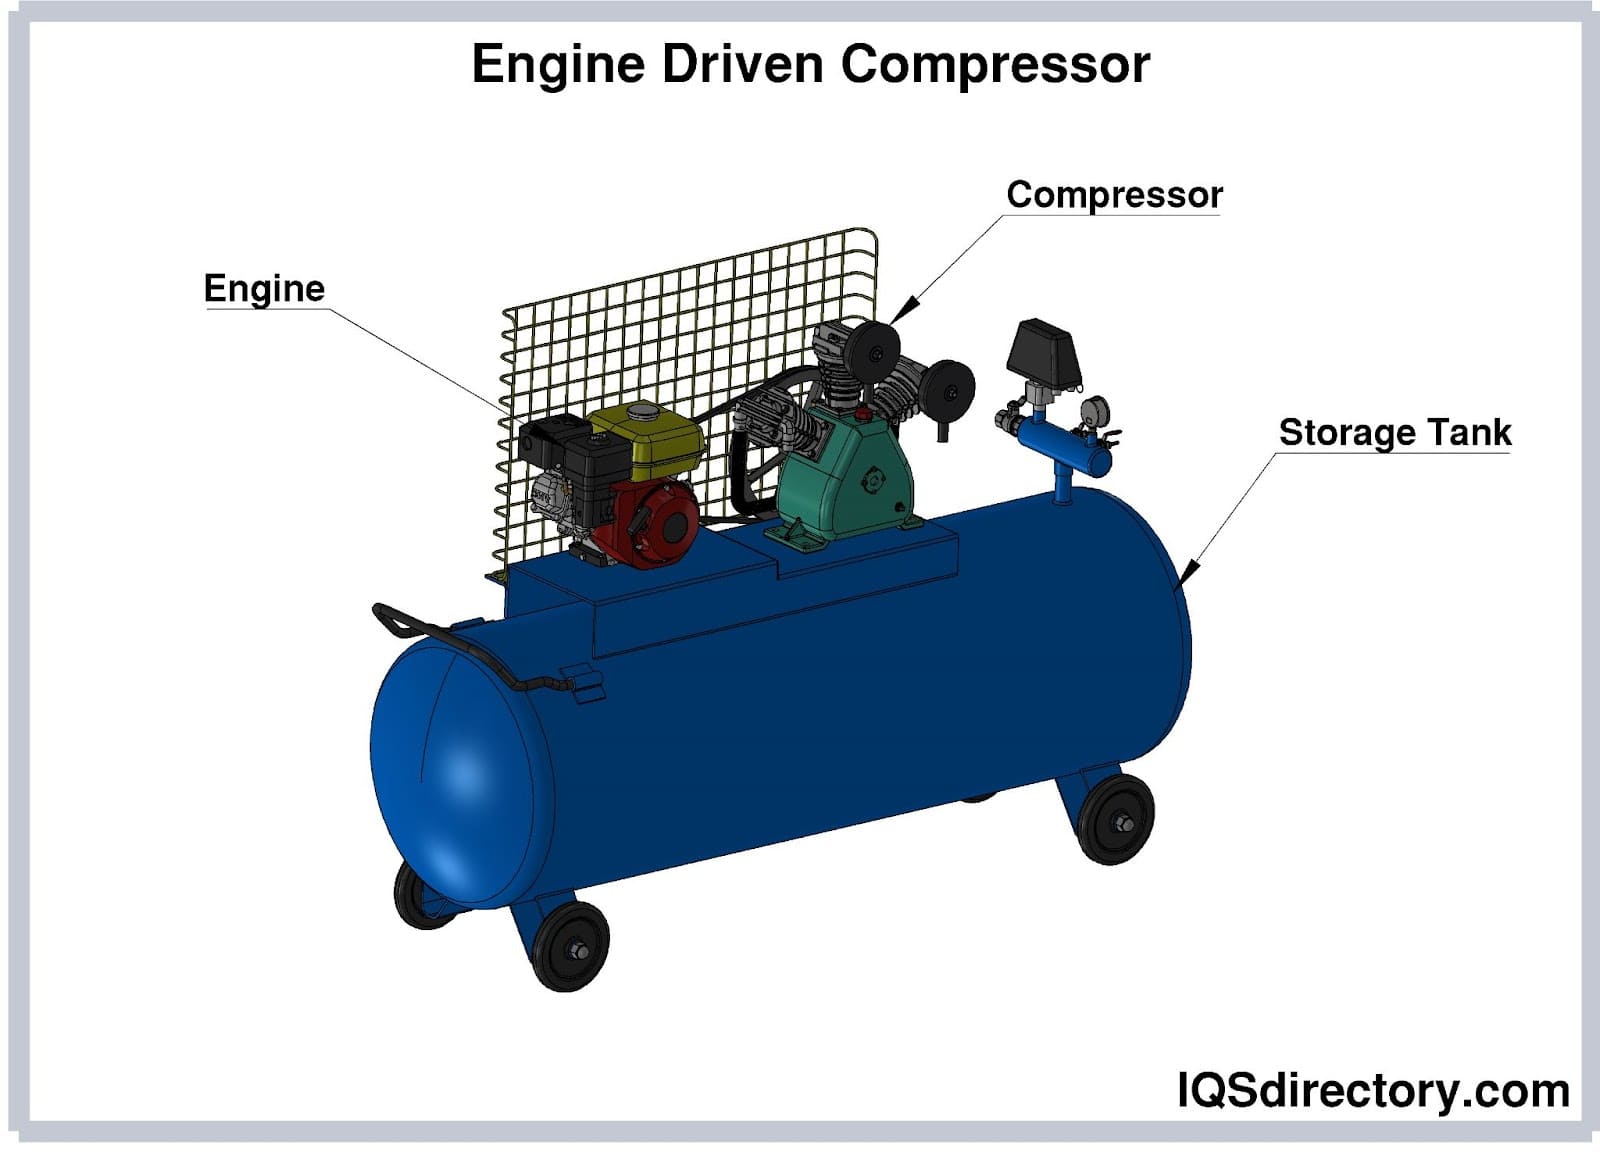 Engine Driven Compressor